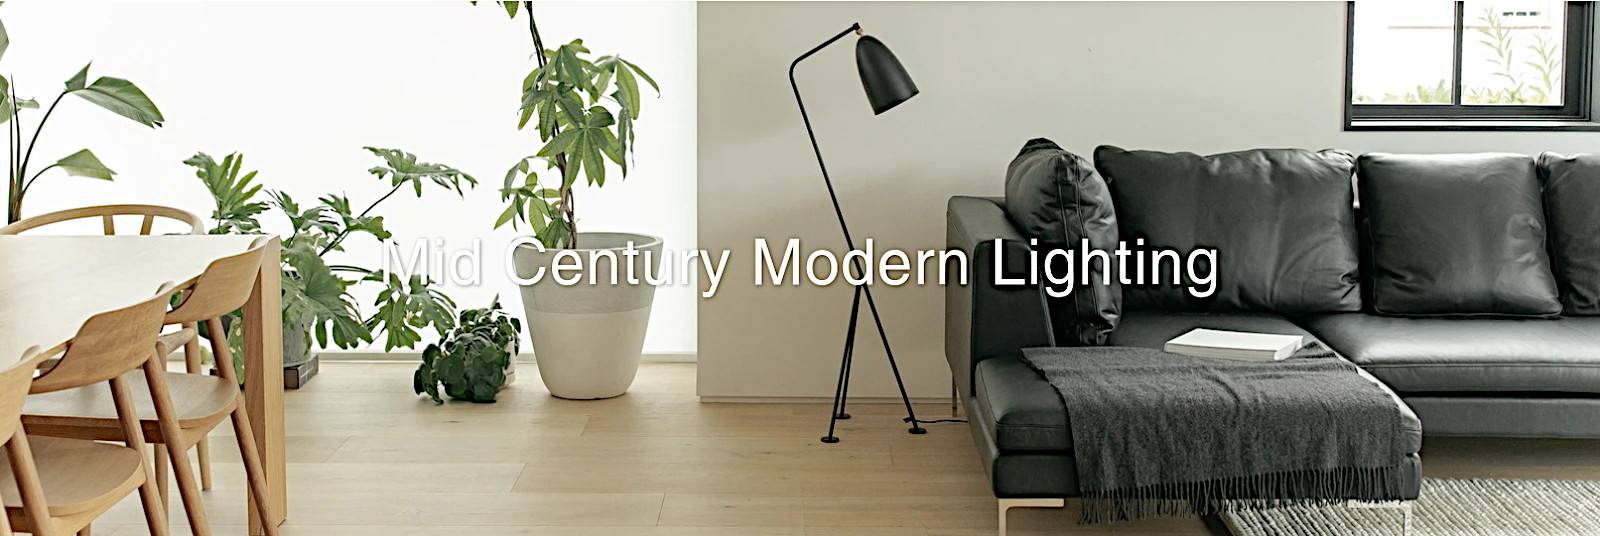 mid century modern lighting price reduction